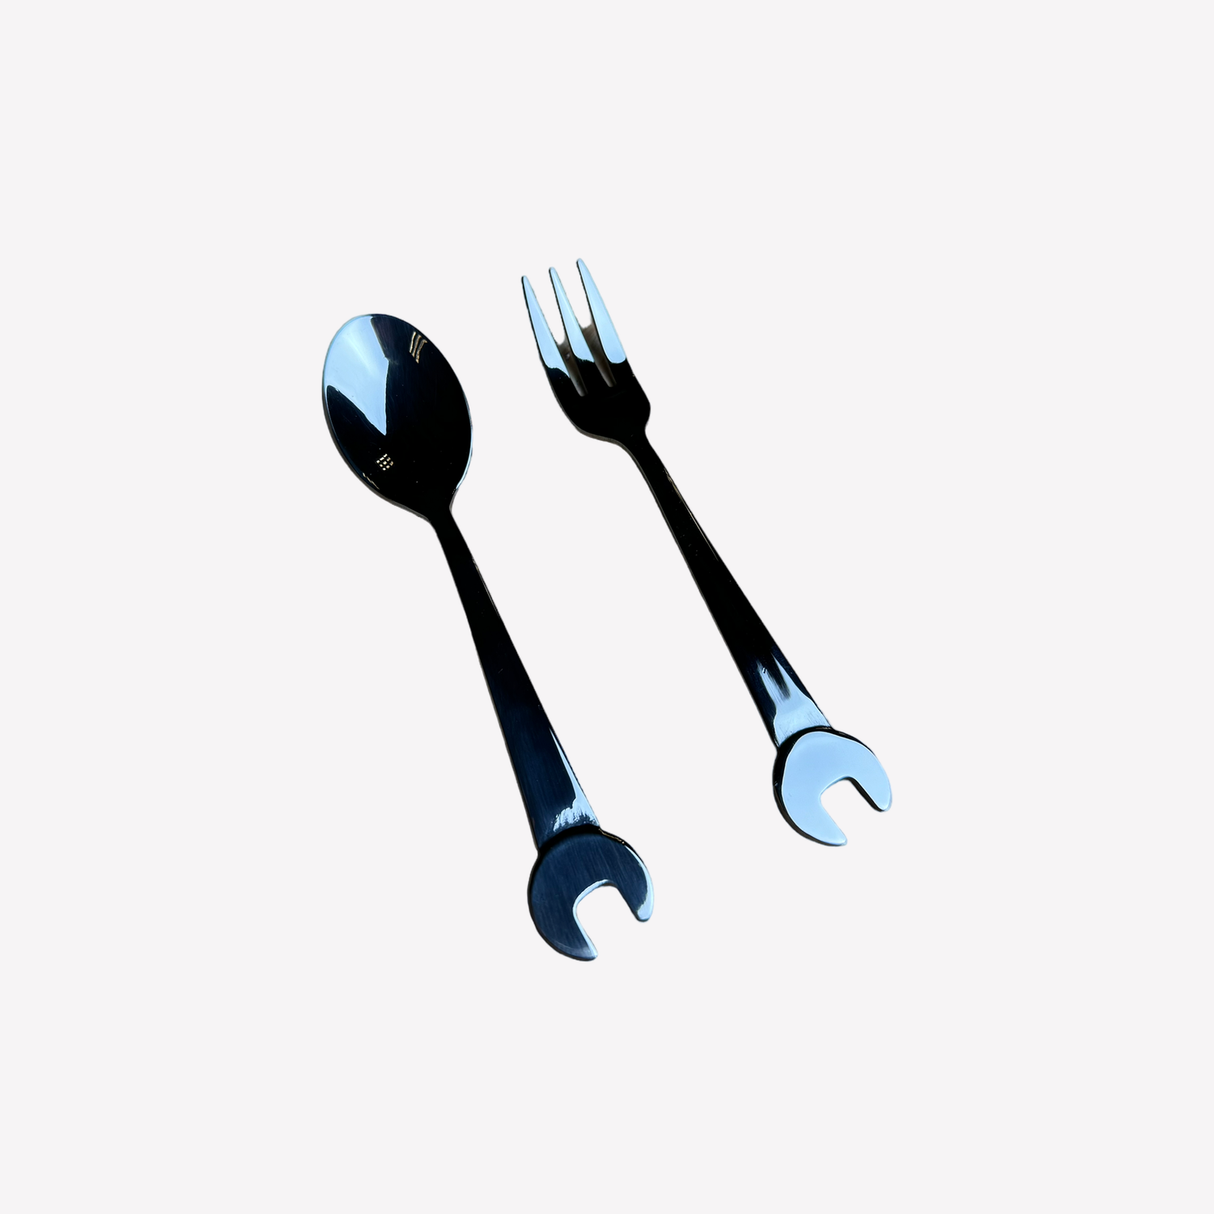 Mechanic Wrench Utensils Spoon & Fork 304 Stainless Steel Cutlery